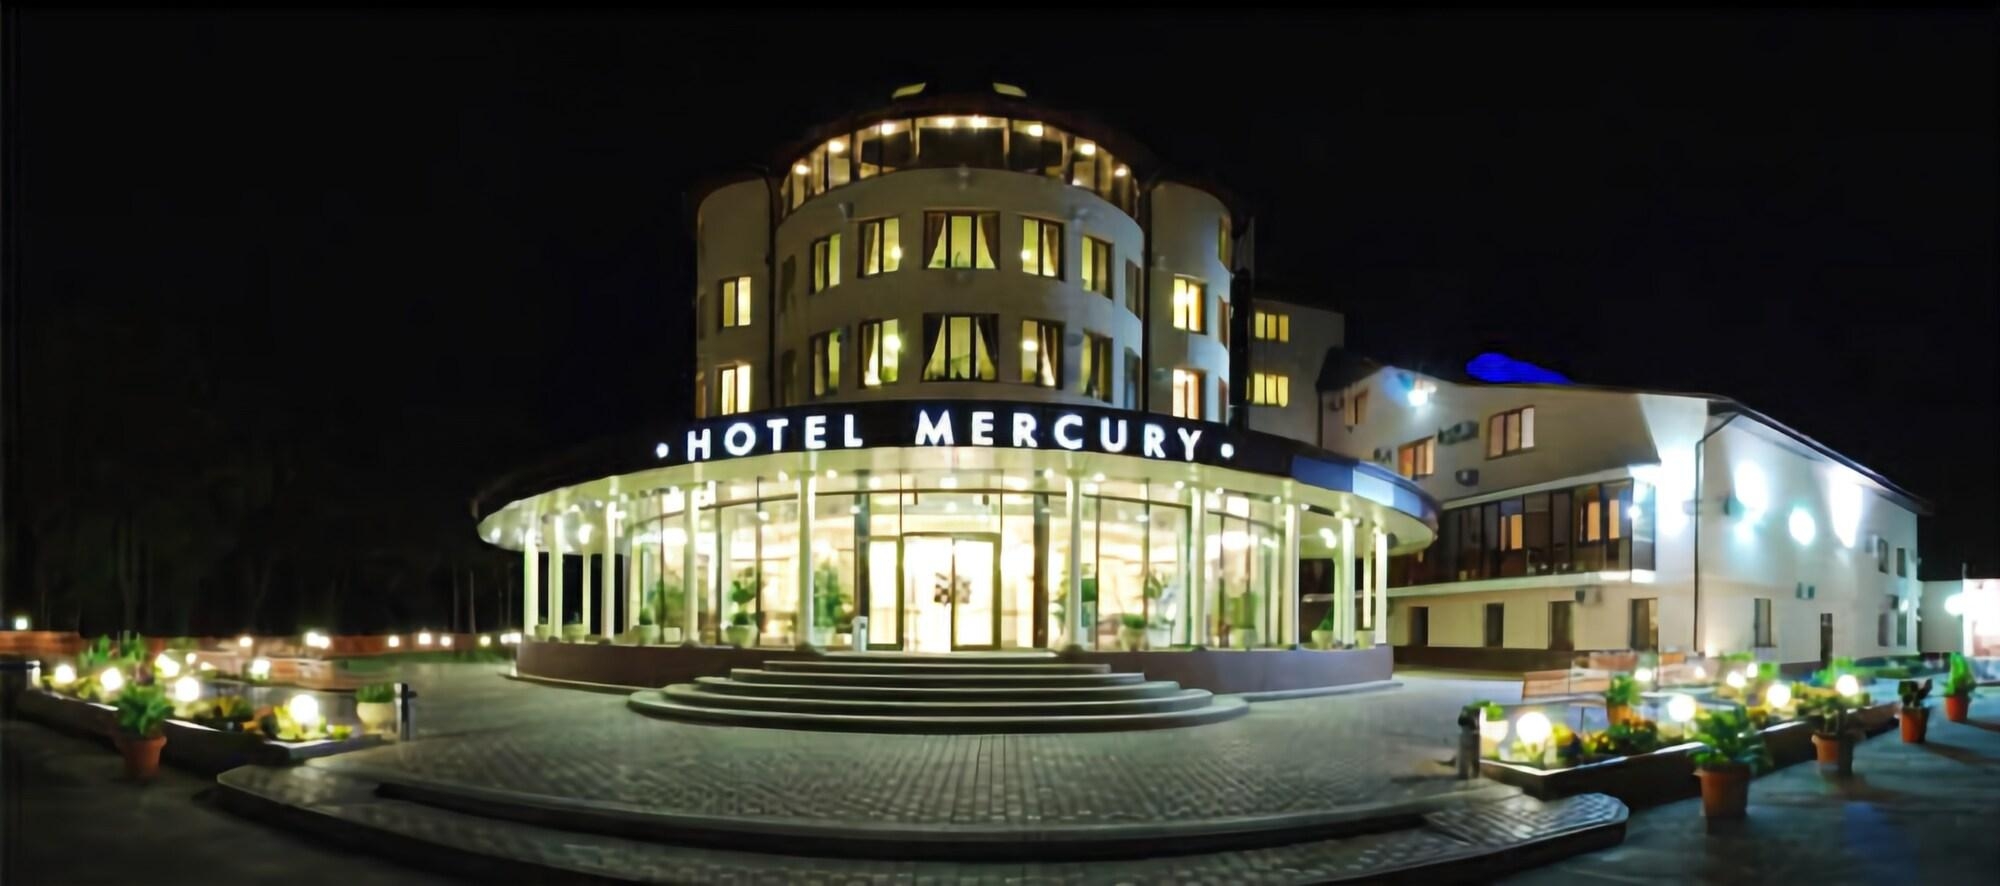 Hôtel Mercury